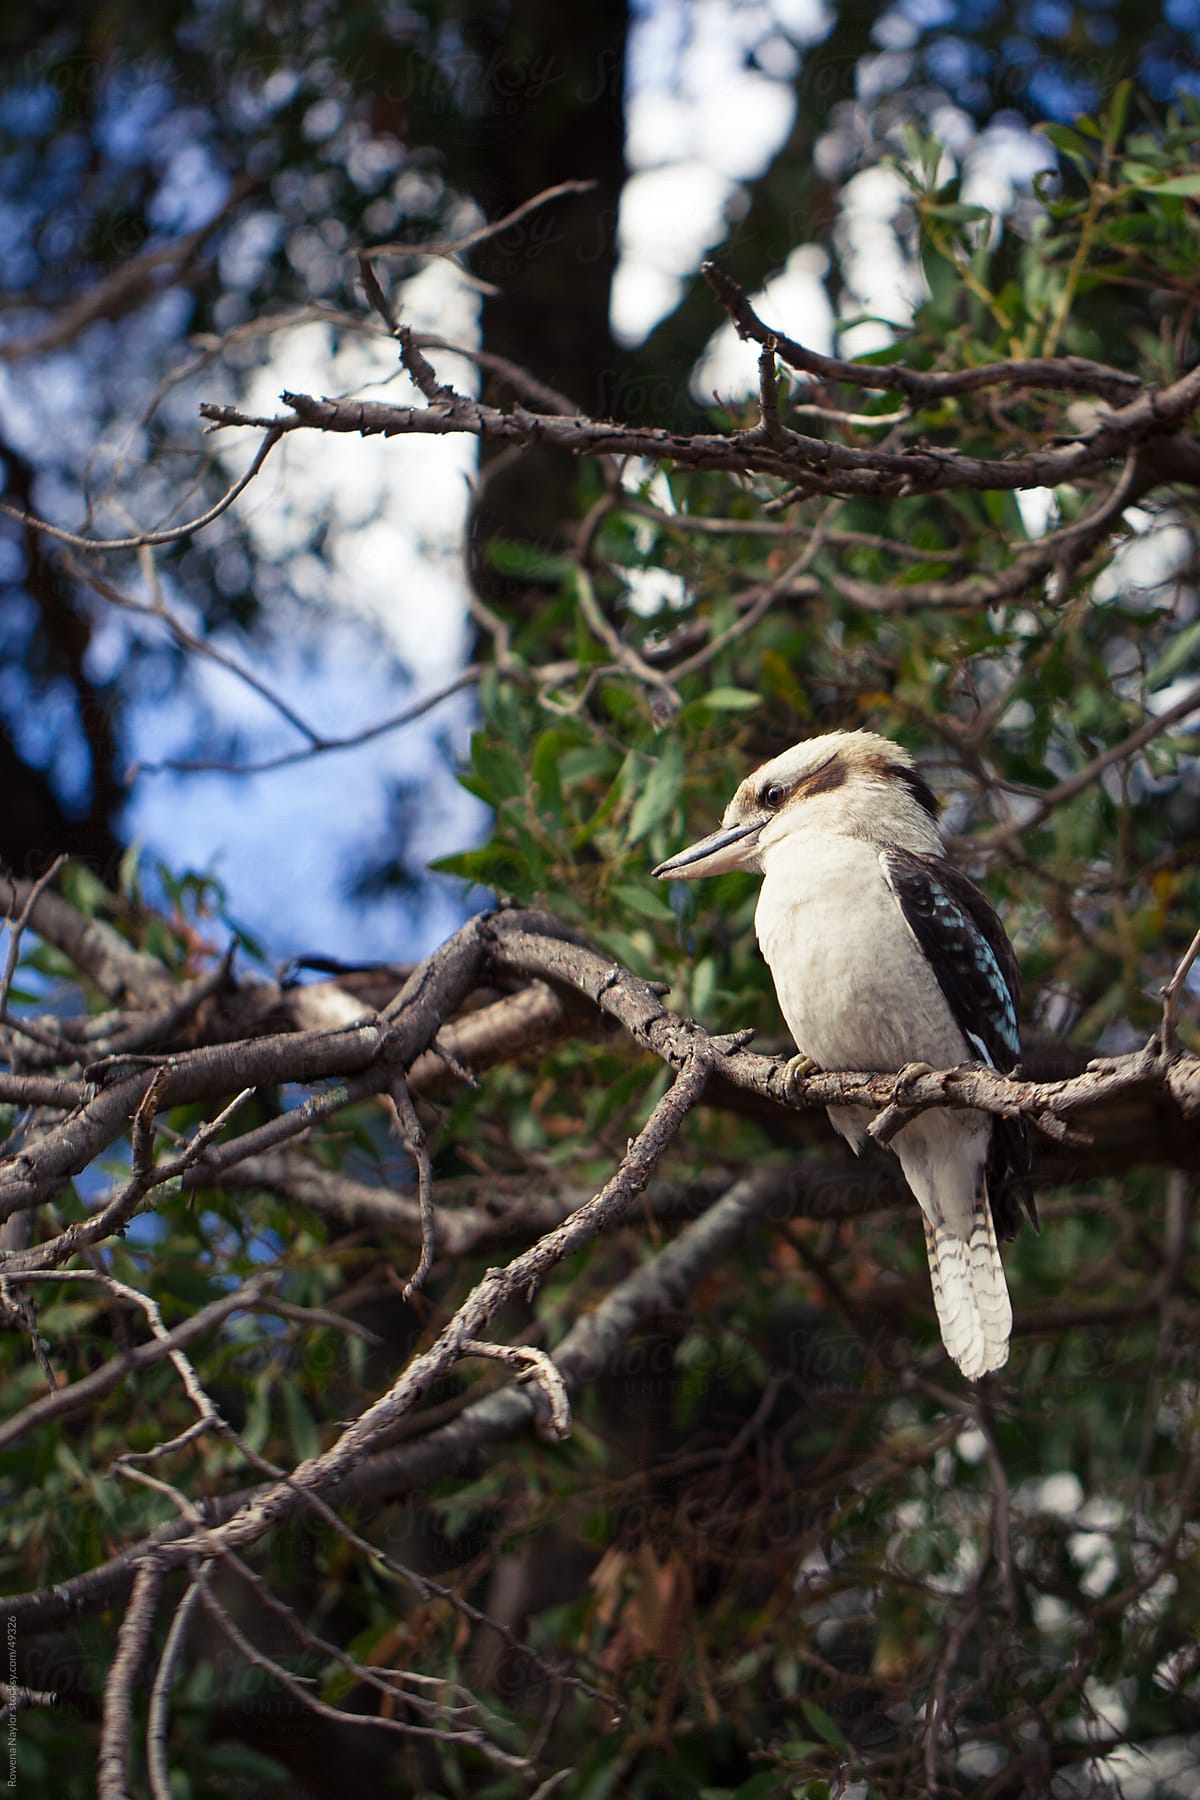 Iconic Australian Kookaburra Bird in Natural Habitat